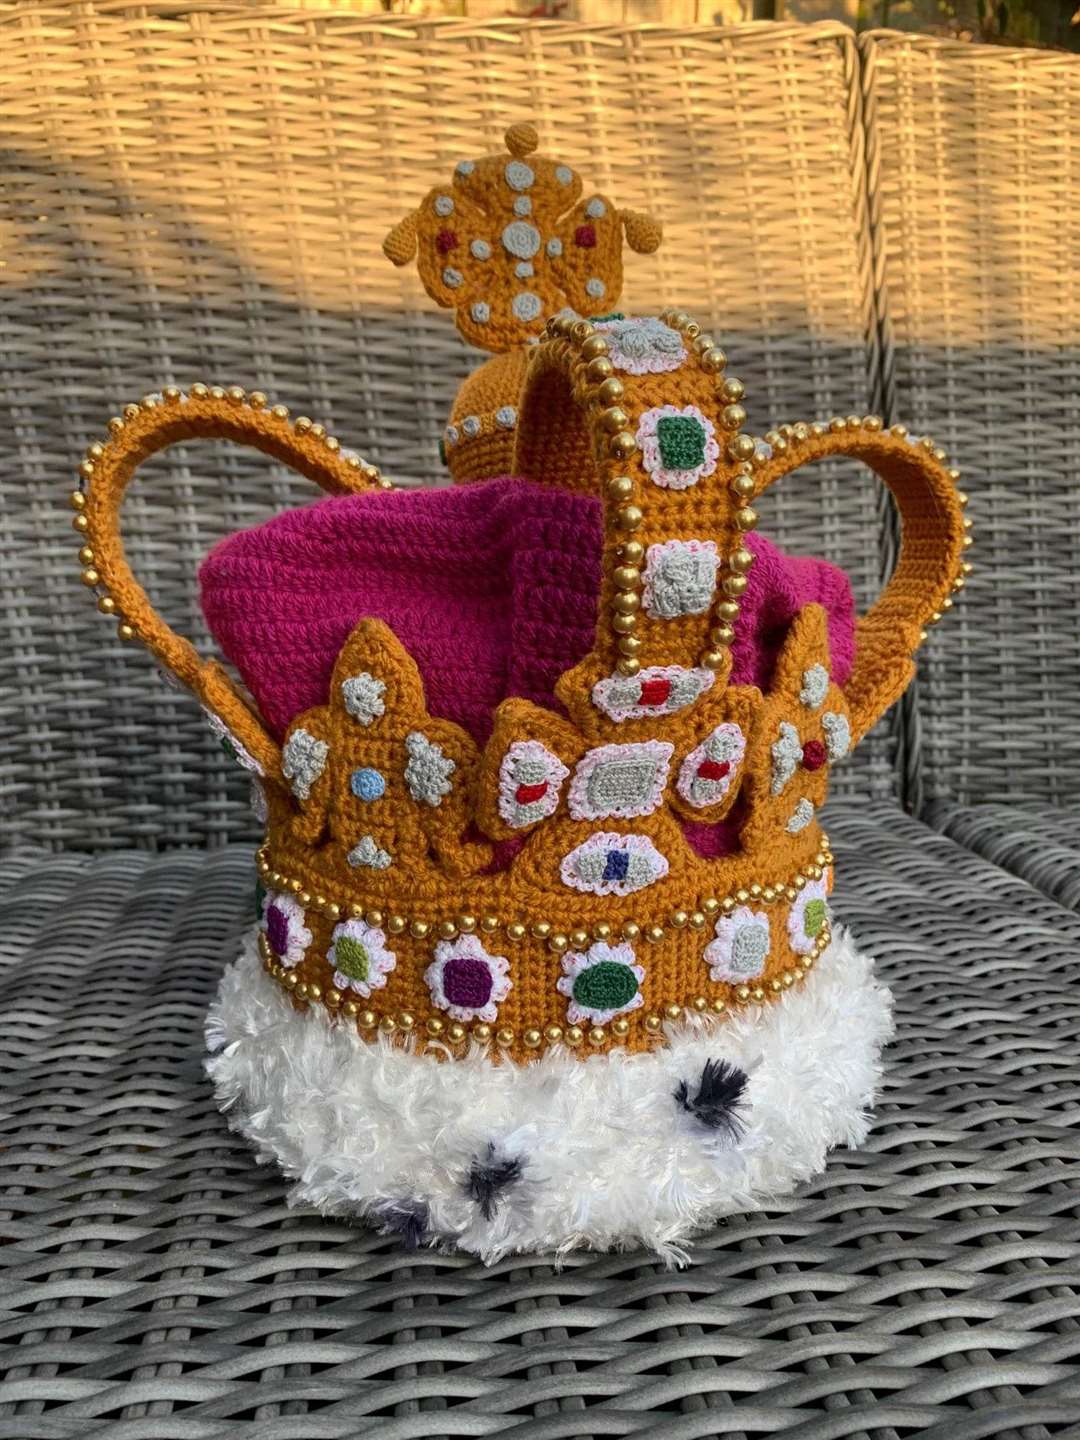 Judit Kocsis-Barna’s crocheted crown (Judit Kocsis-Barna/PA)